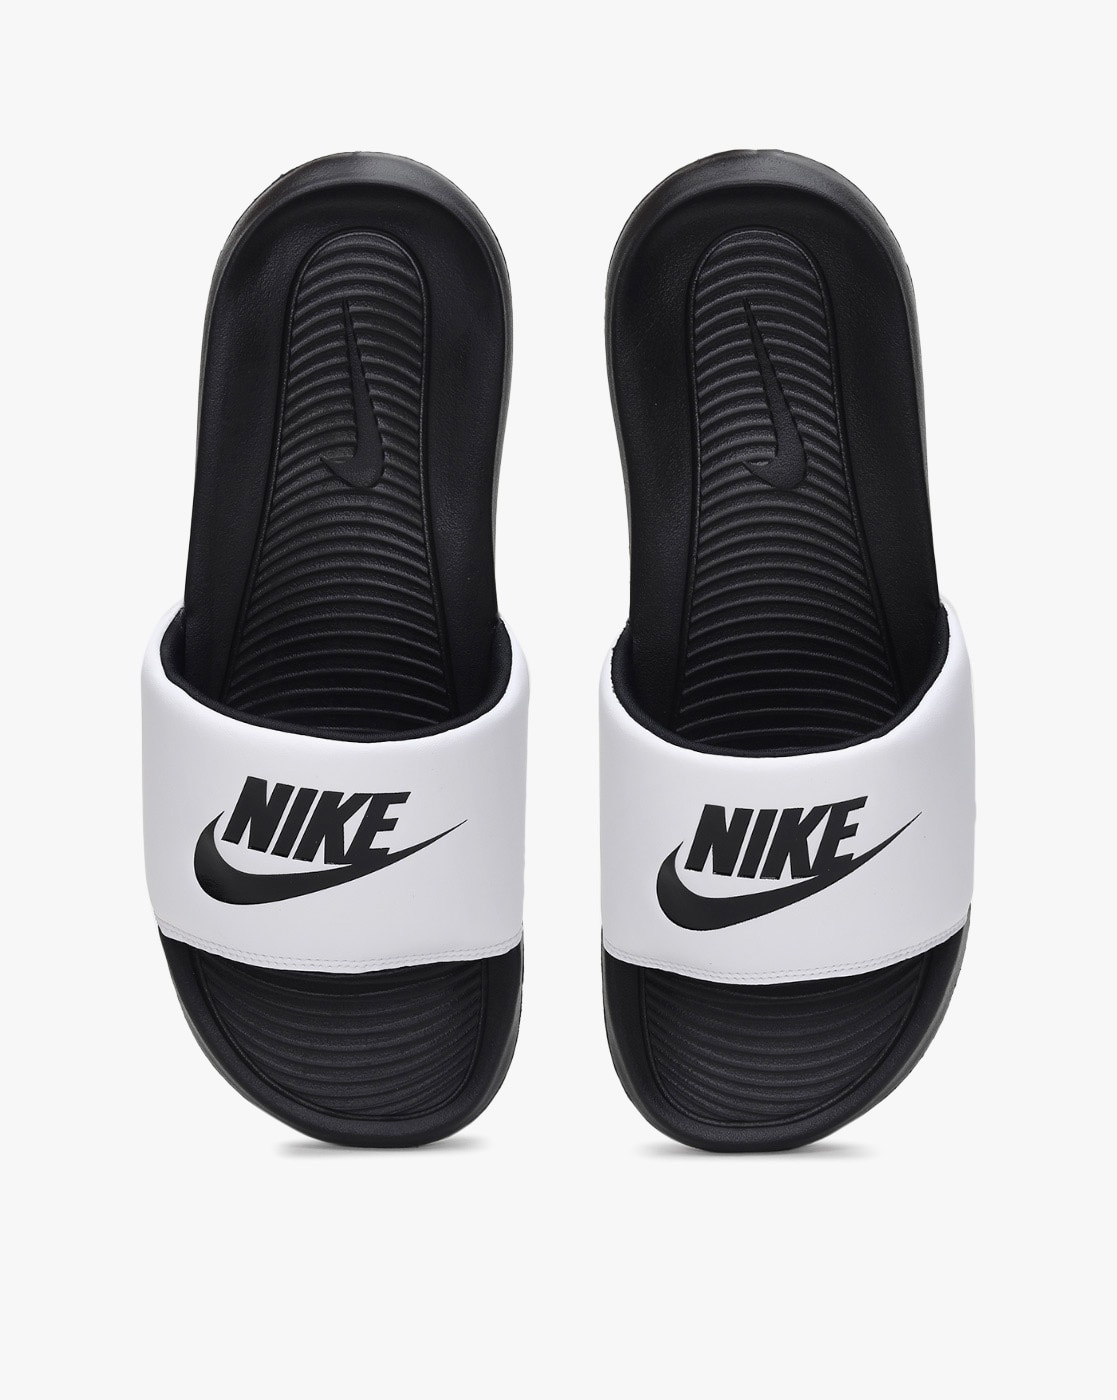 Shop Nike Slide Men Original online | Lazada.com.ph-thanhphatduhoc.com.vn